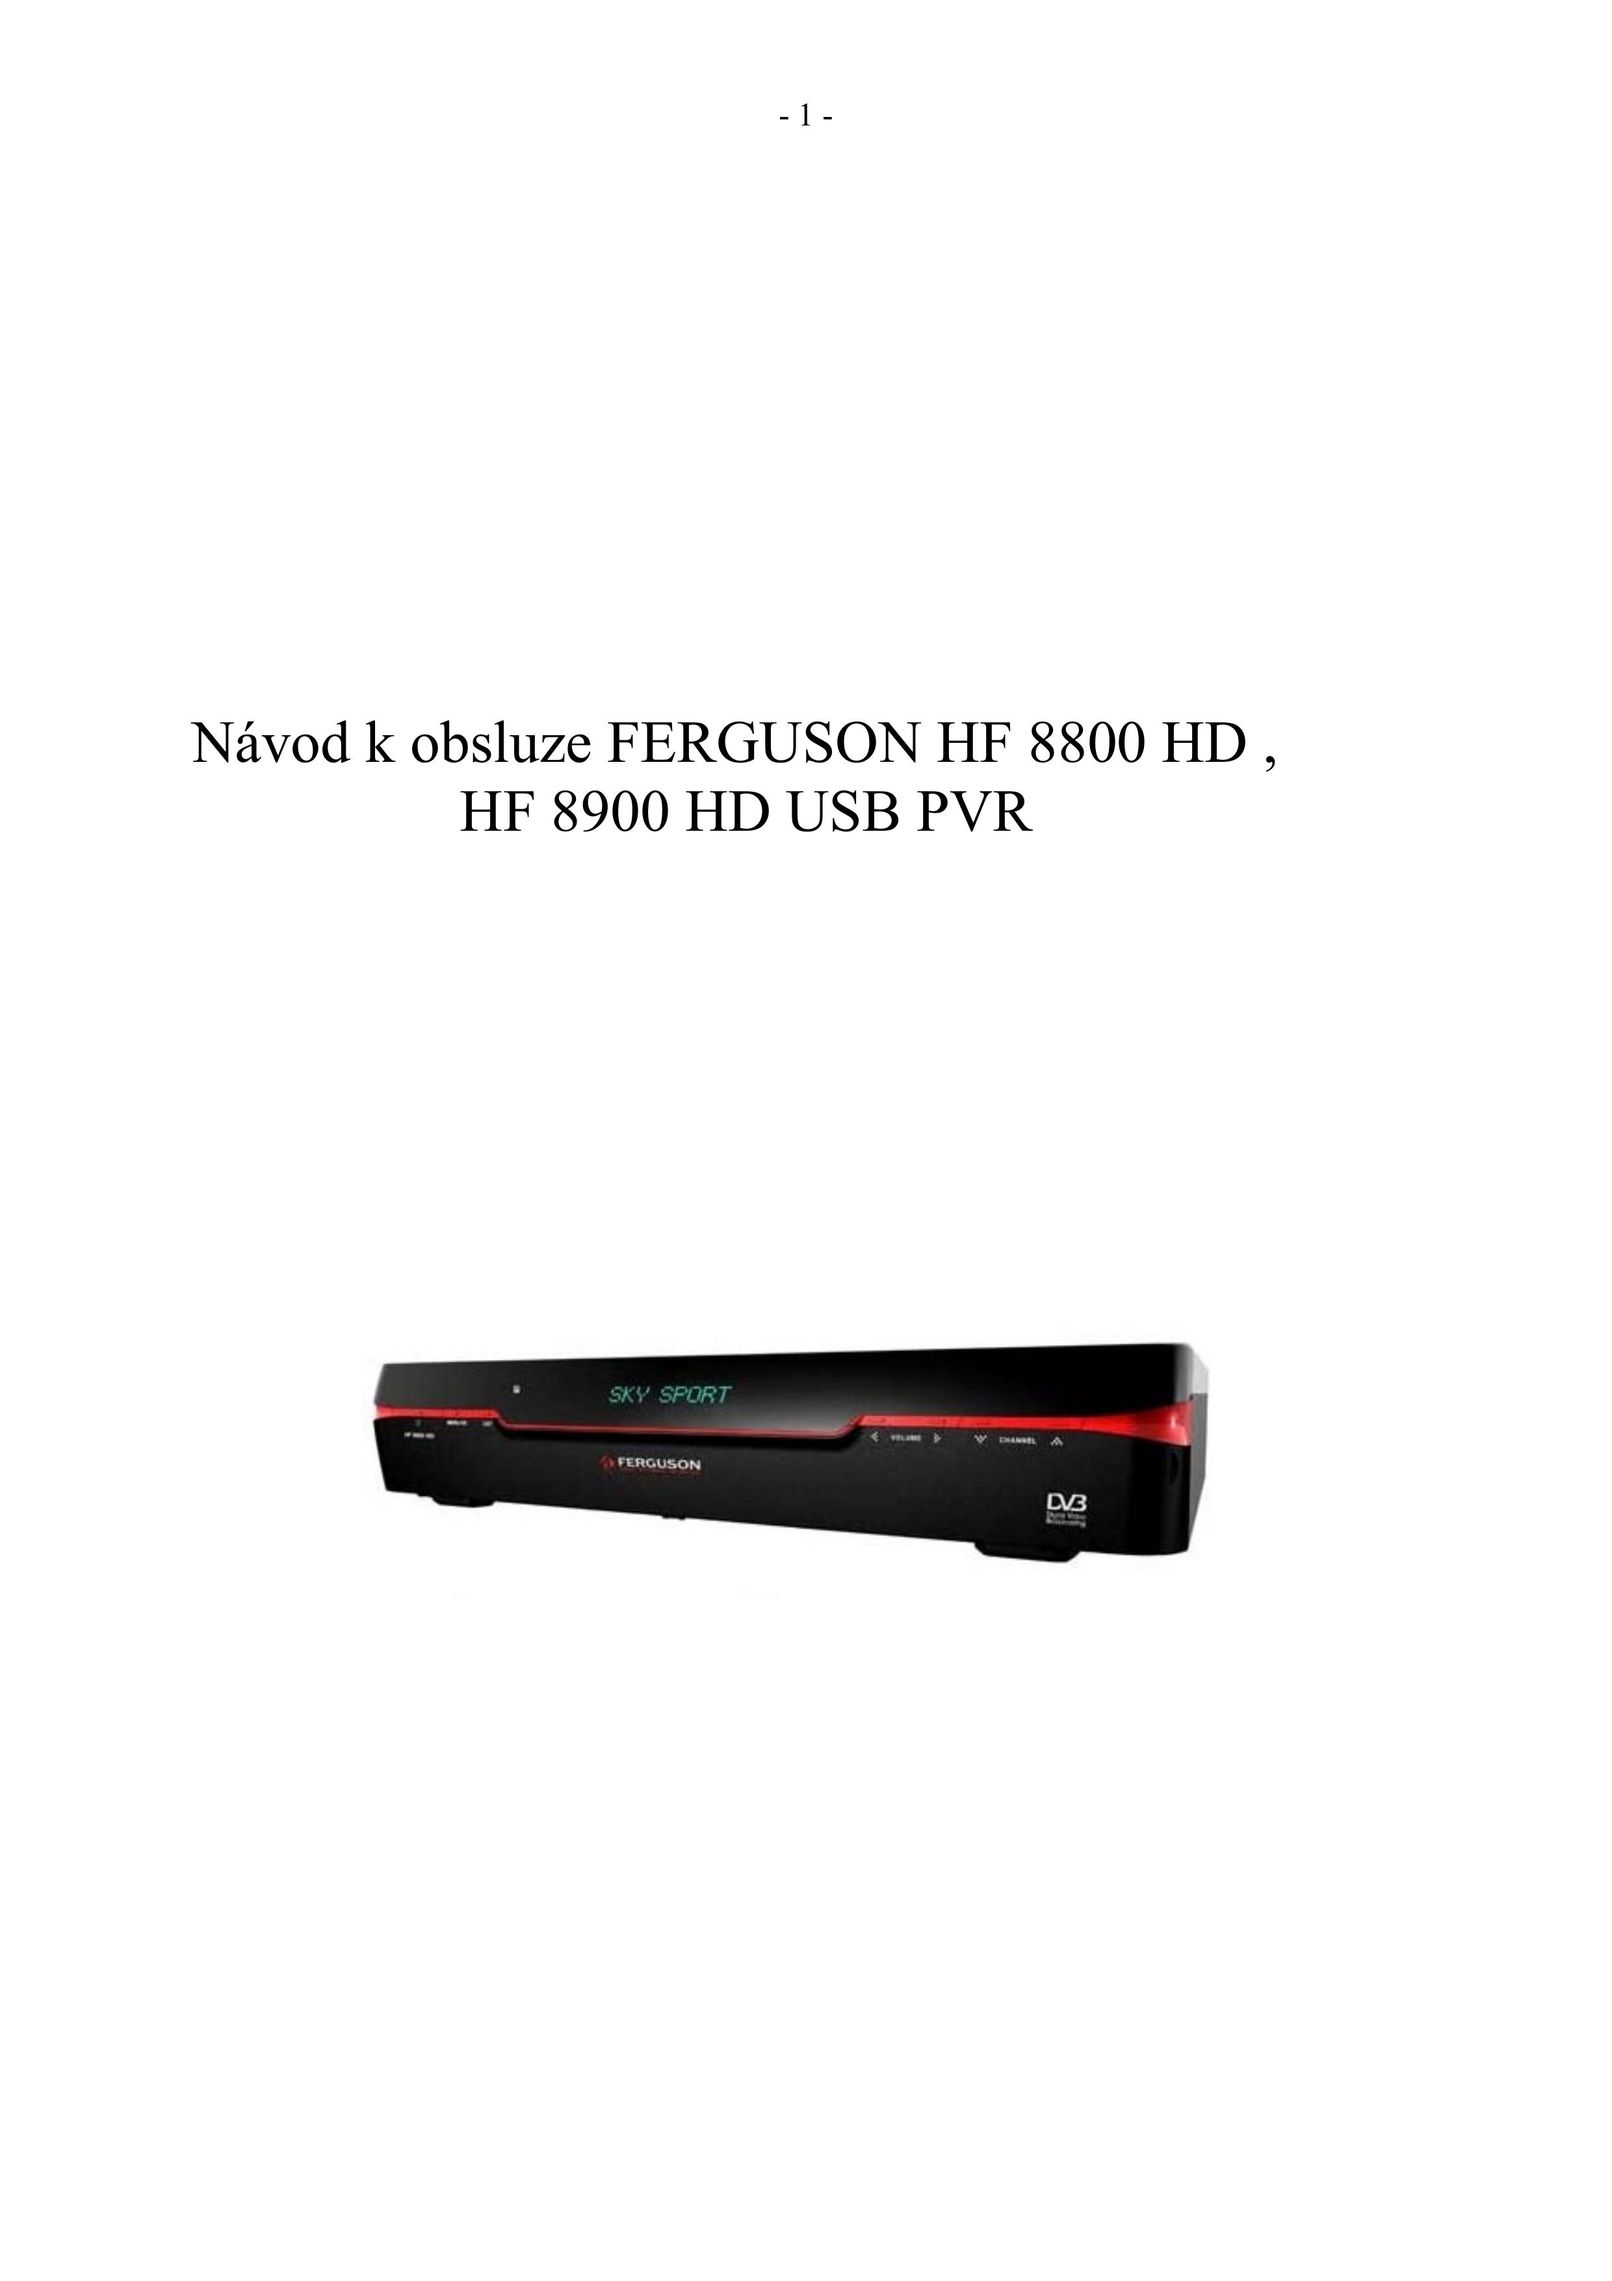 Ferguson HF 8900 HD Computer Drive User Manual